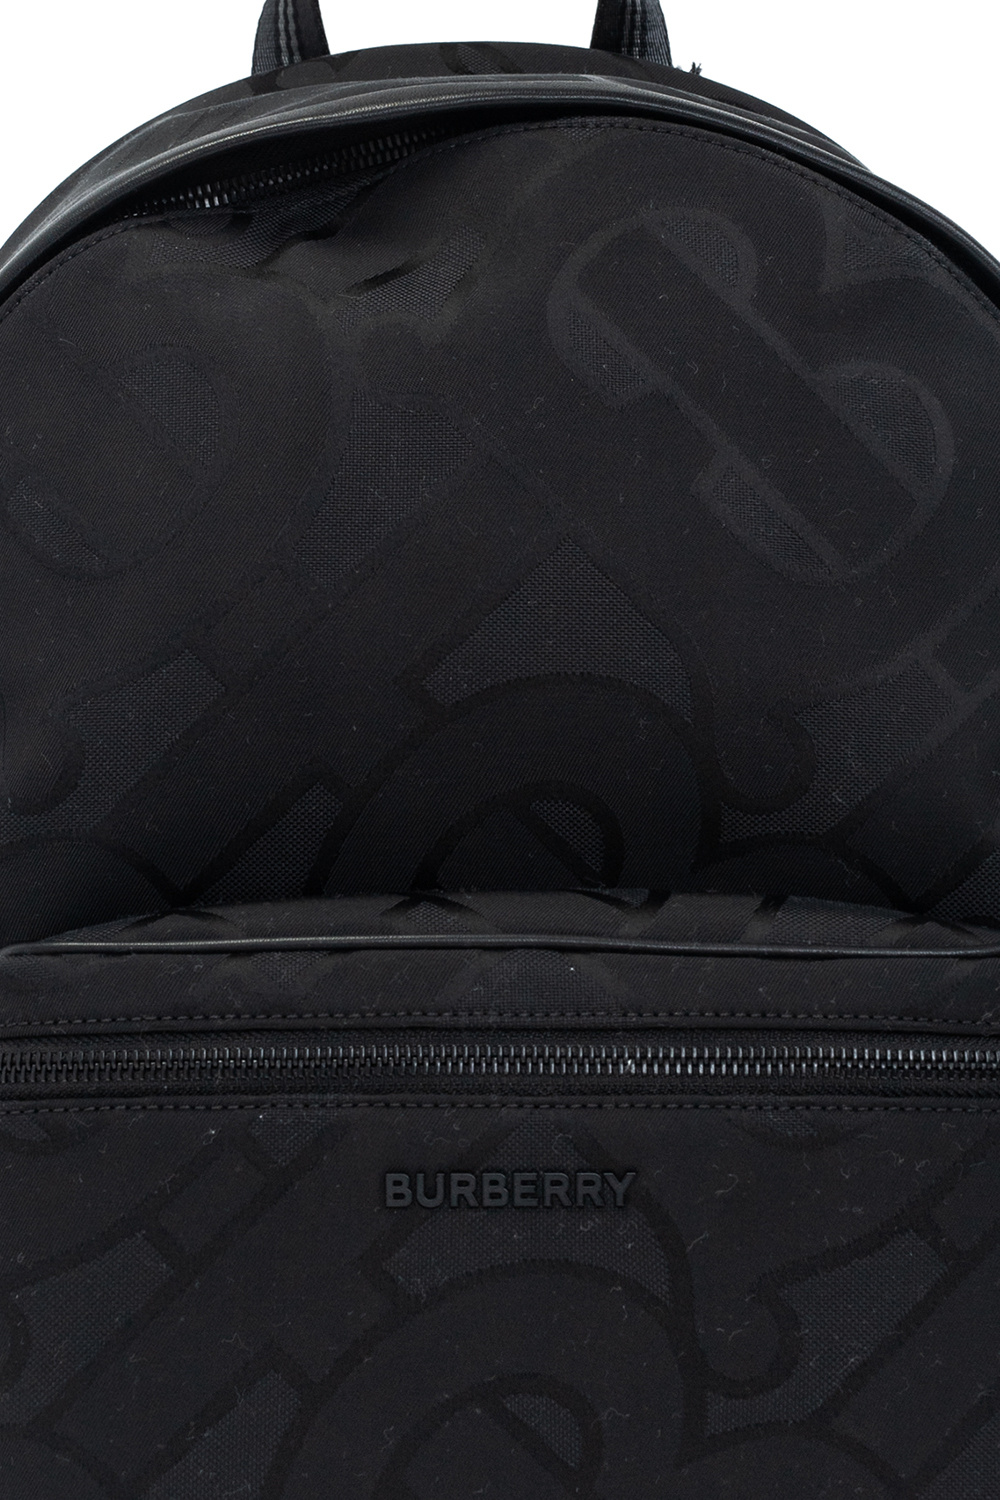 burberry Arthur Backpack with logo